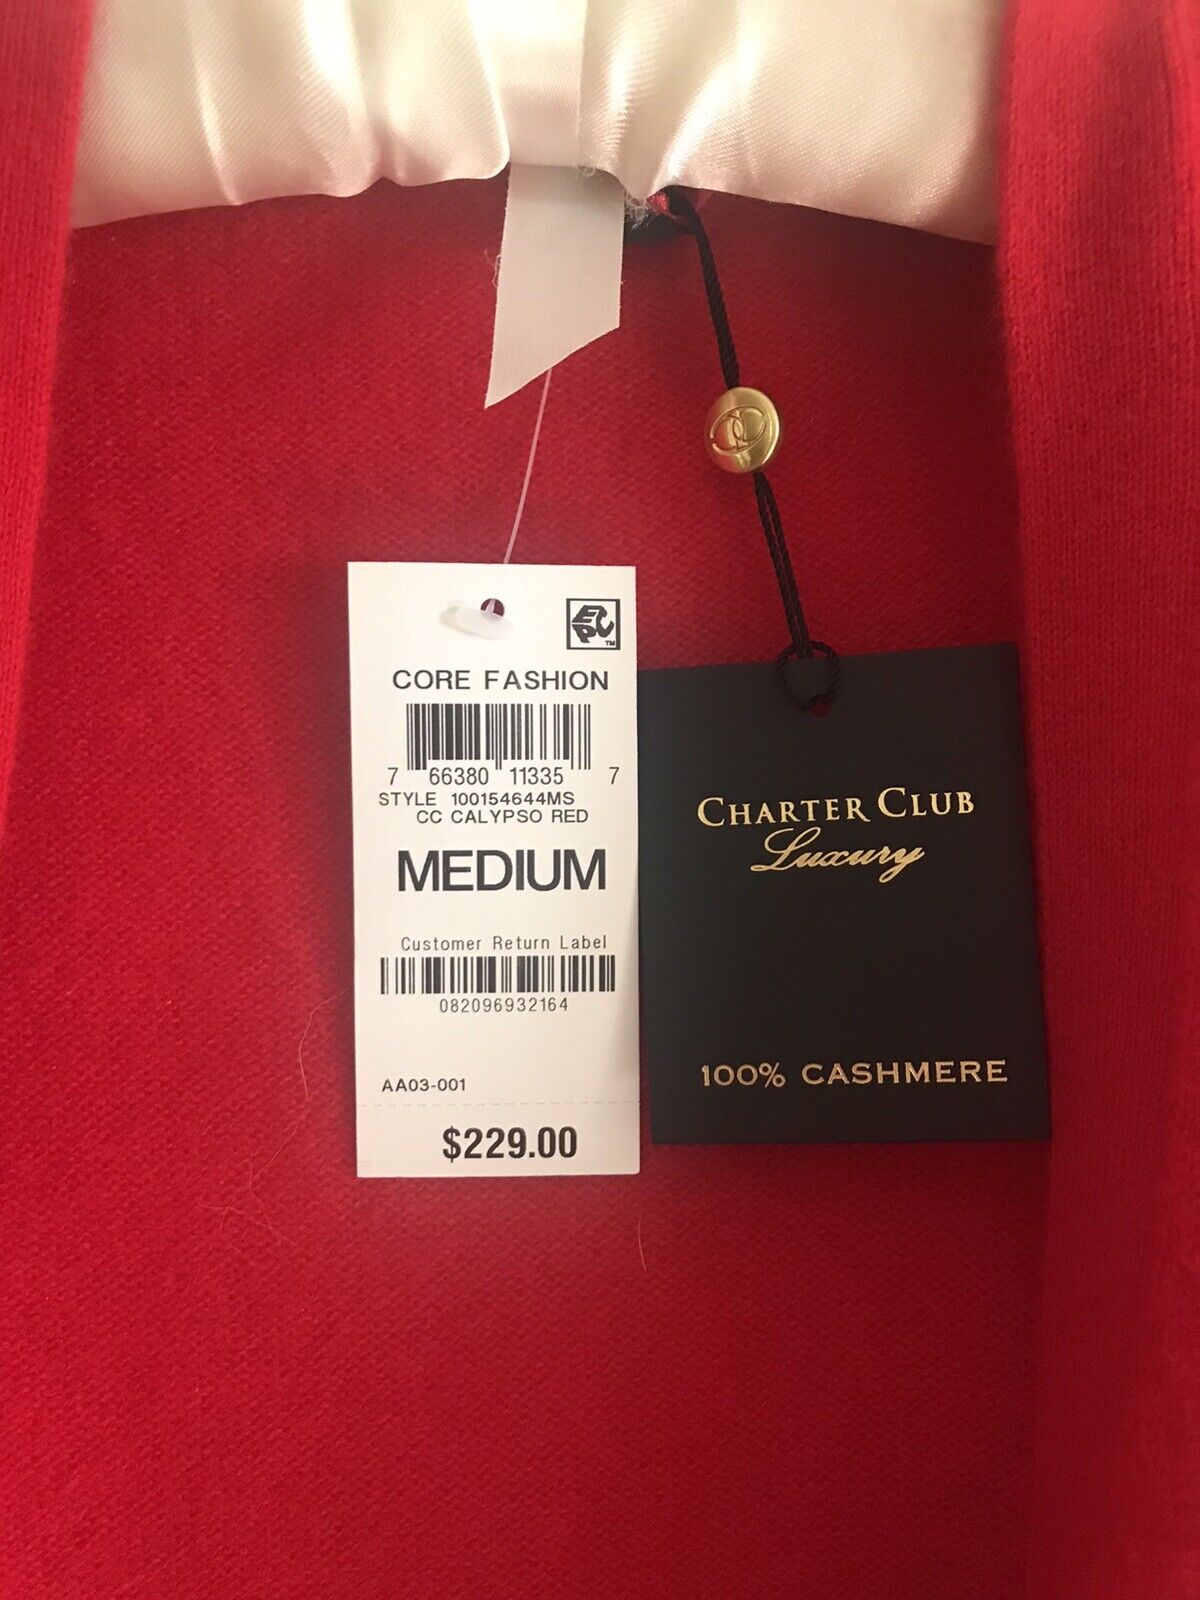 charter club cashmere sweater medium | eBay